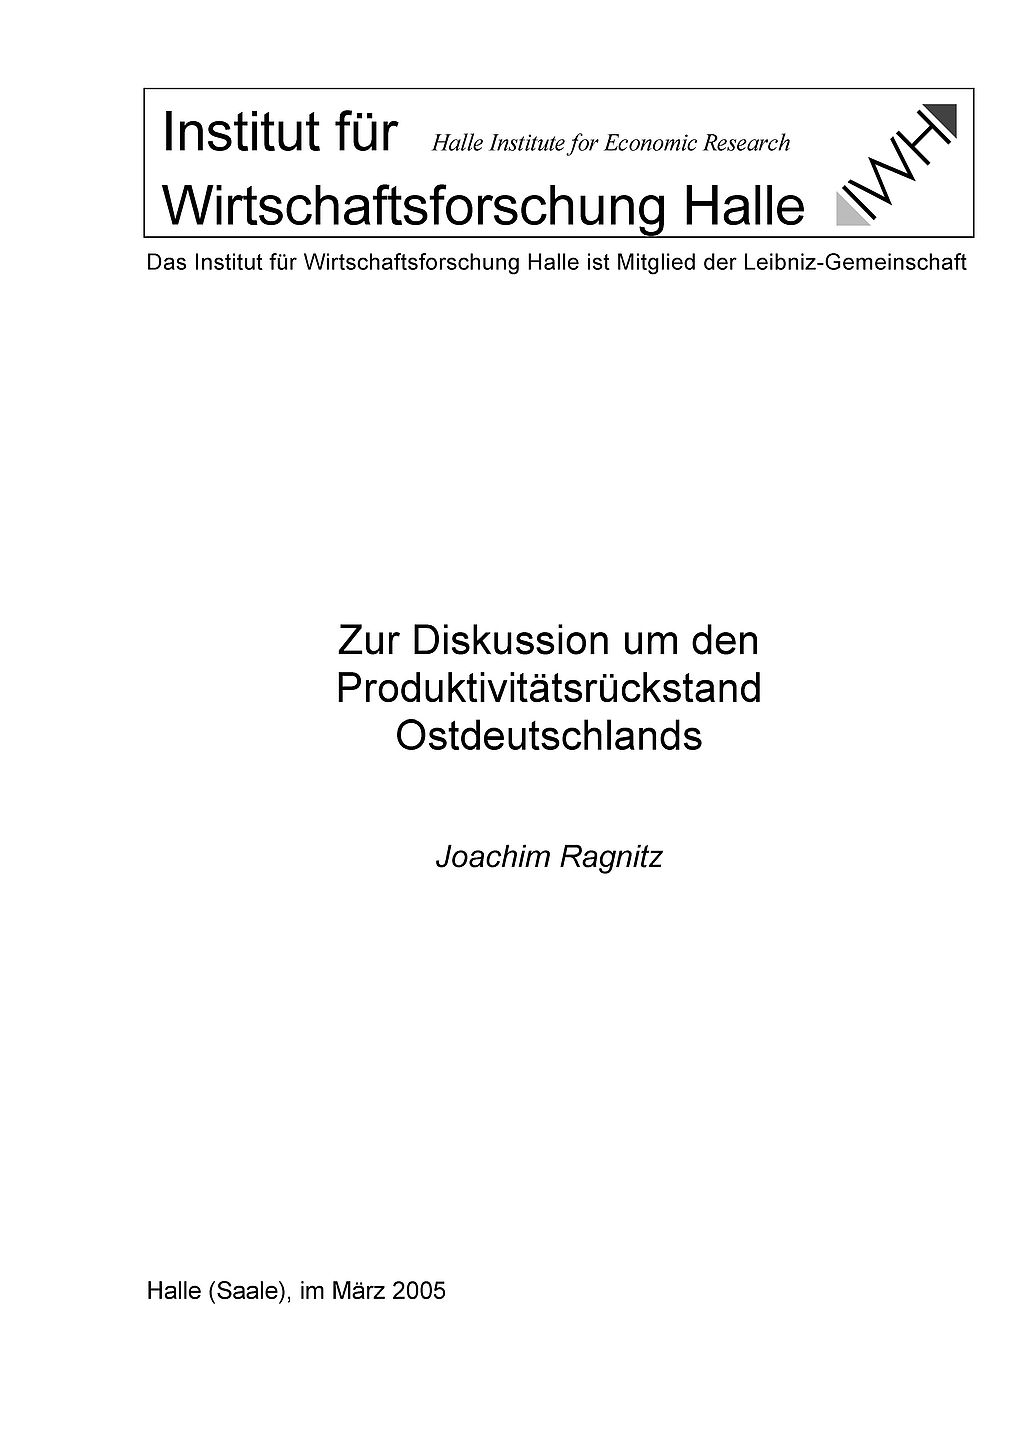 cover_produktivitaetsrueckstand_2005.jpg